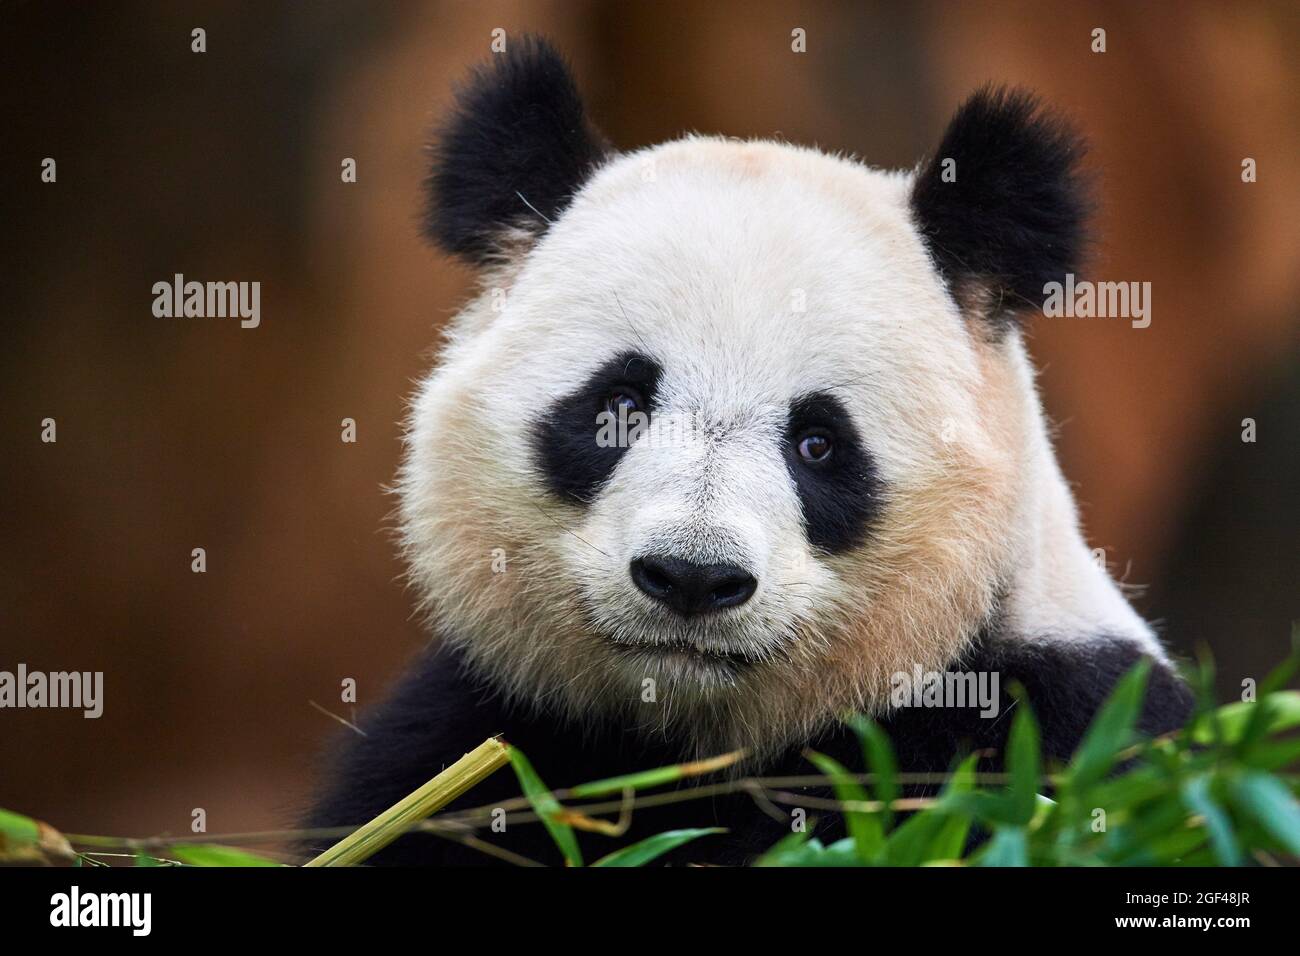 Ritratto maschile panda gigante (Ailuropoda melanoleuca) Captive, ZooPark Beauval, Francia. Foto Stock